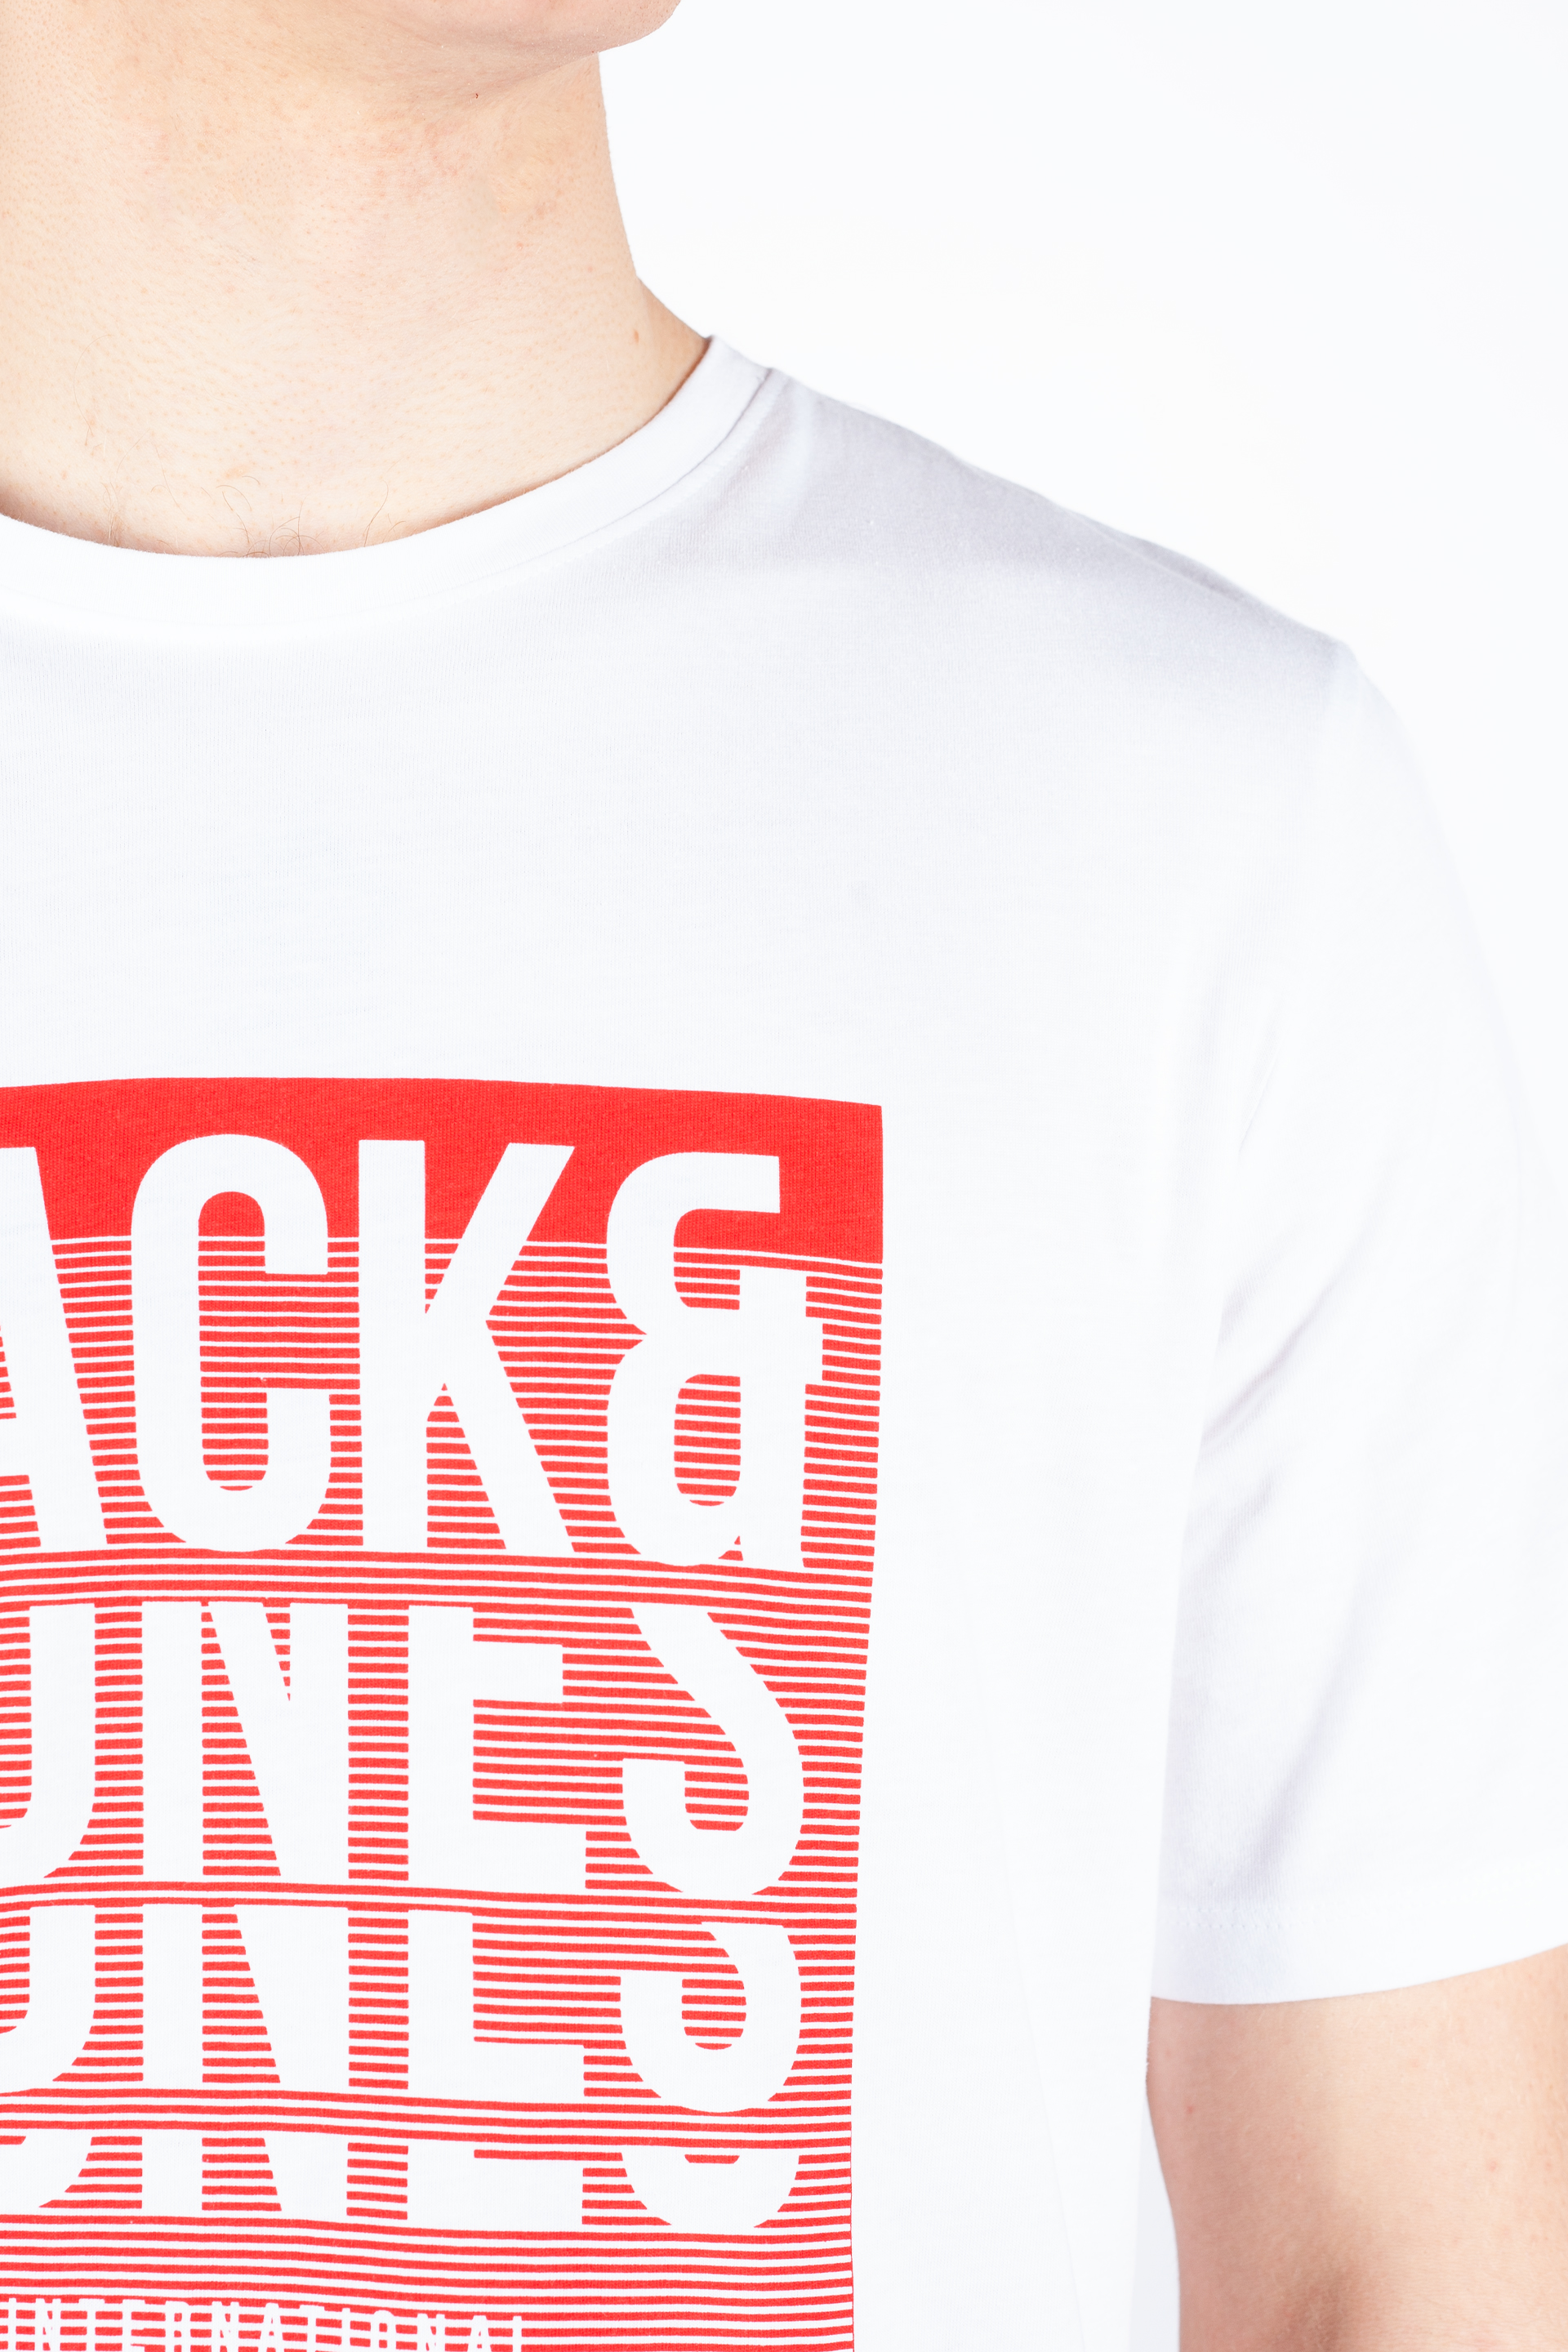 T-krekls JACK & JONES 12248614-White